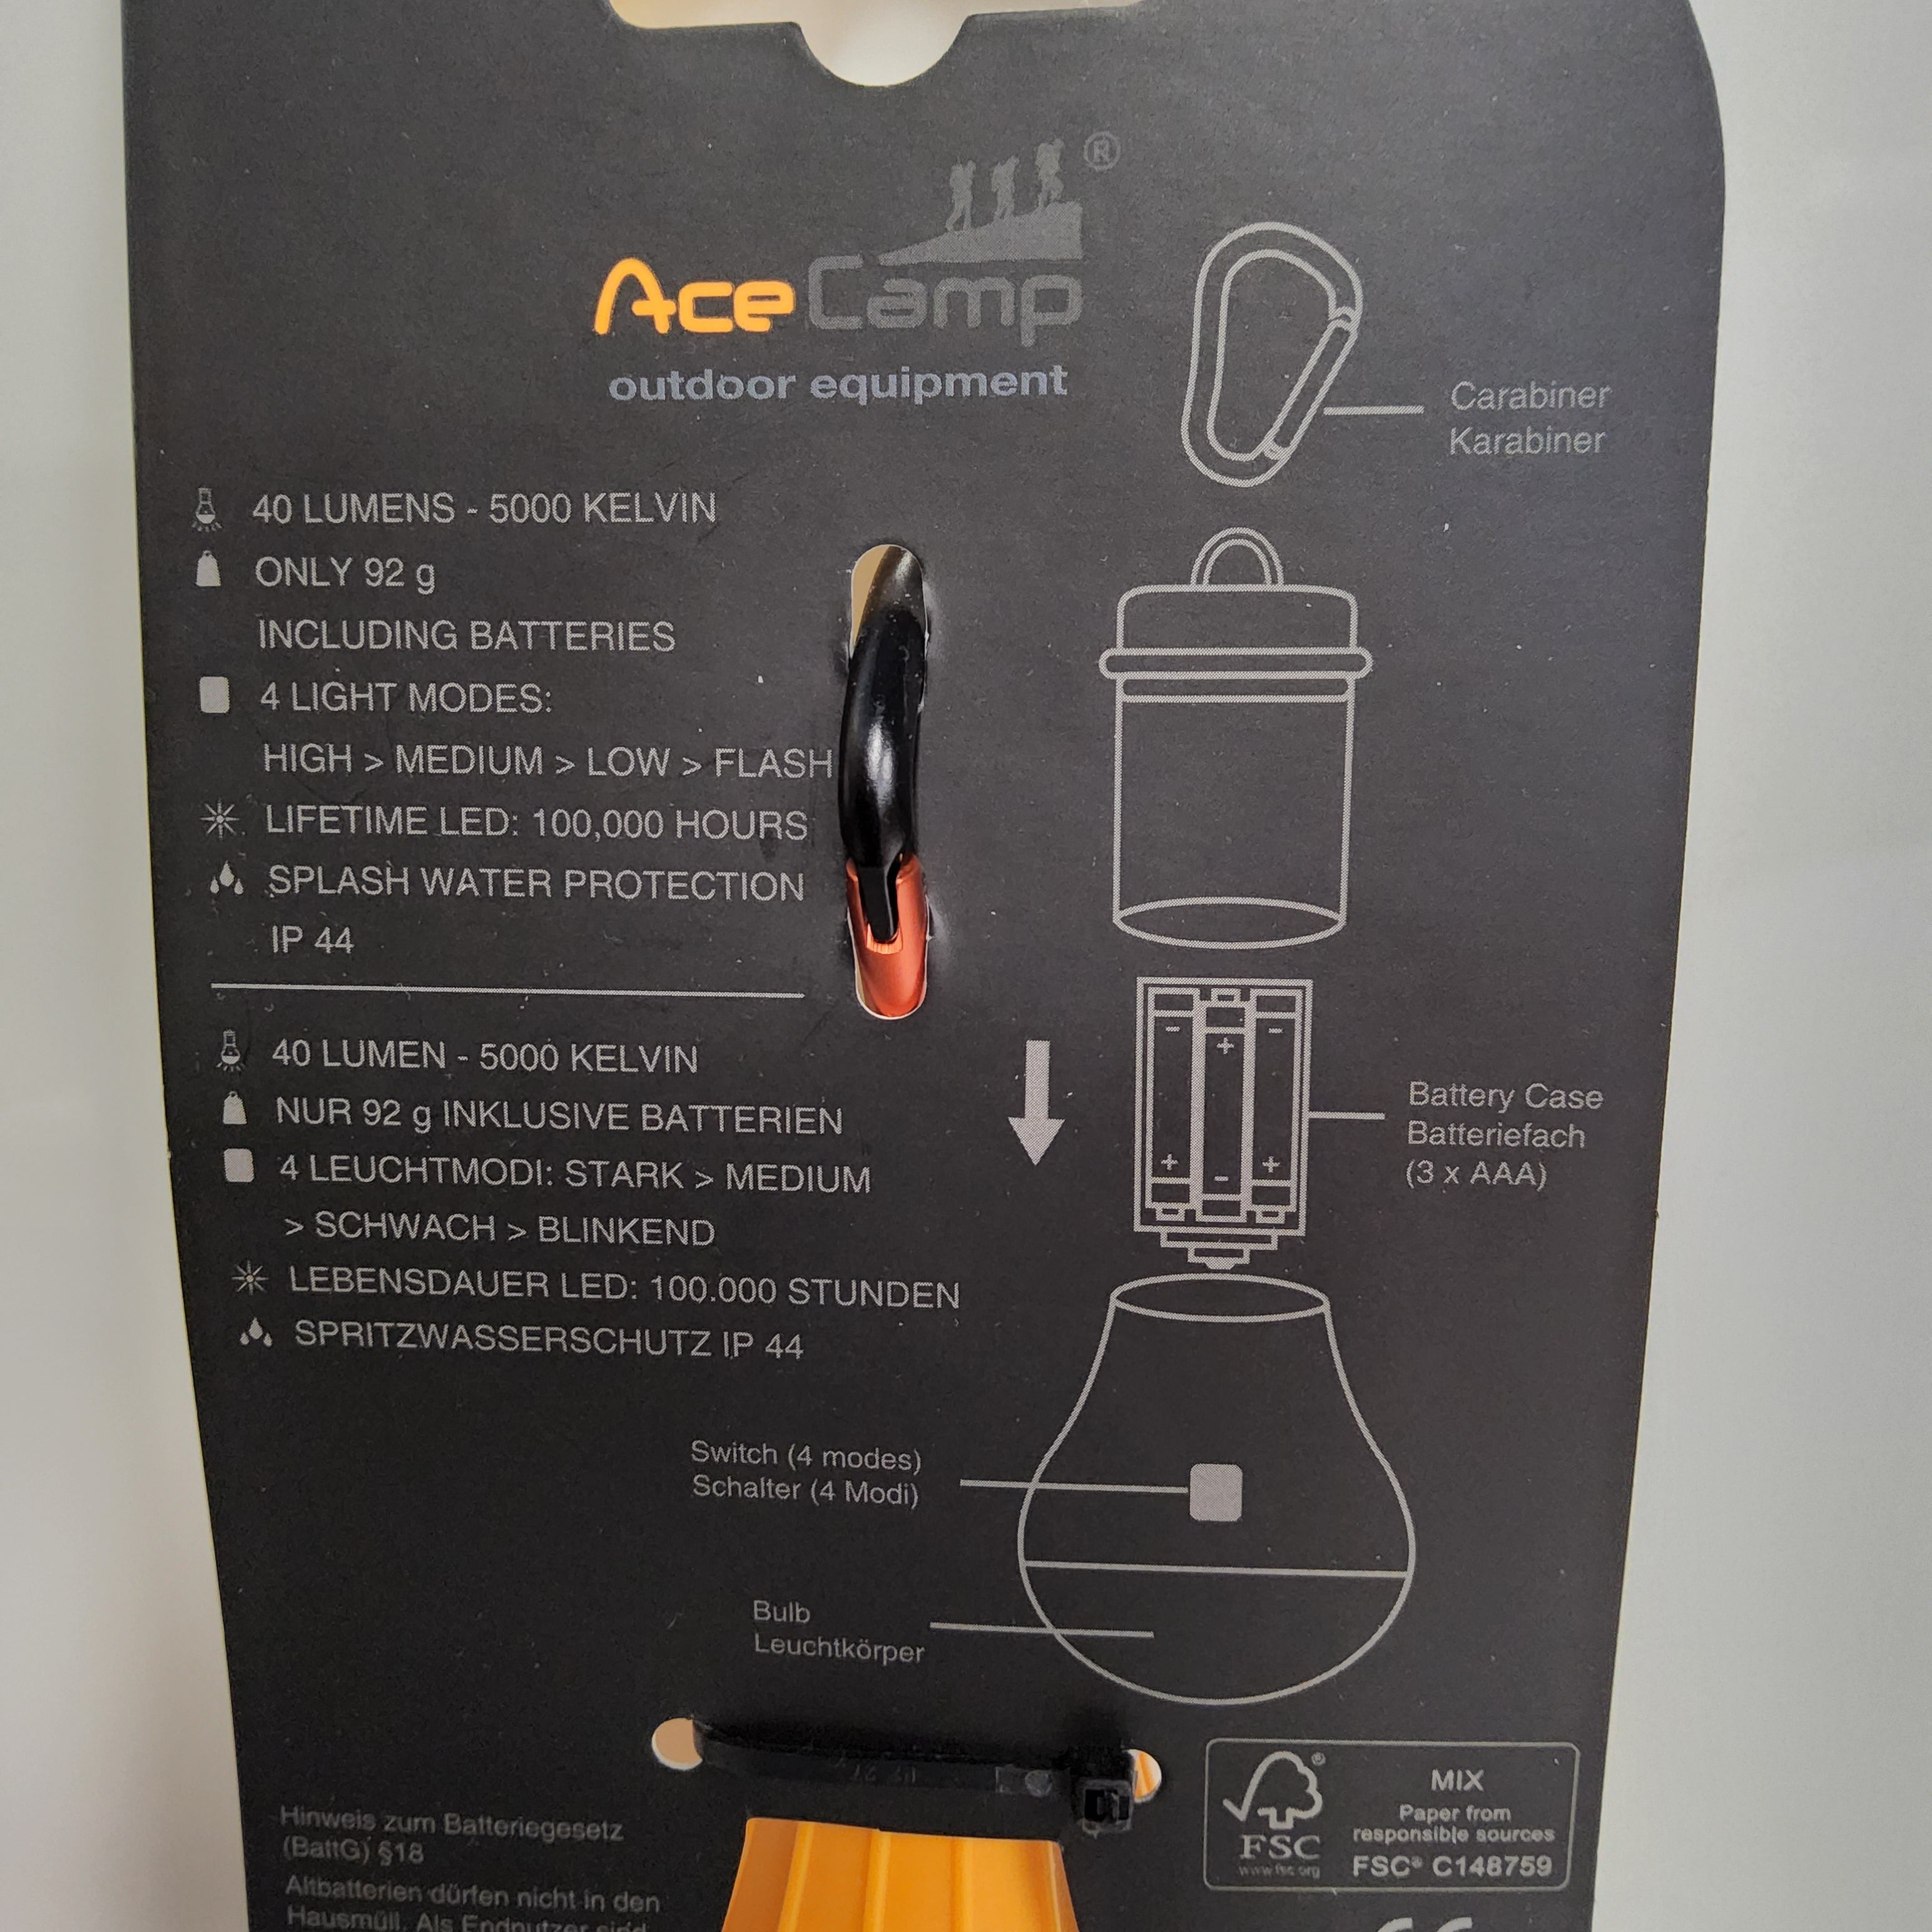 Ace Camp LED Tent Lamp #1028